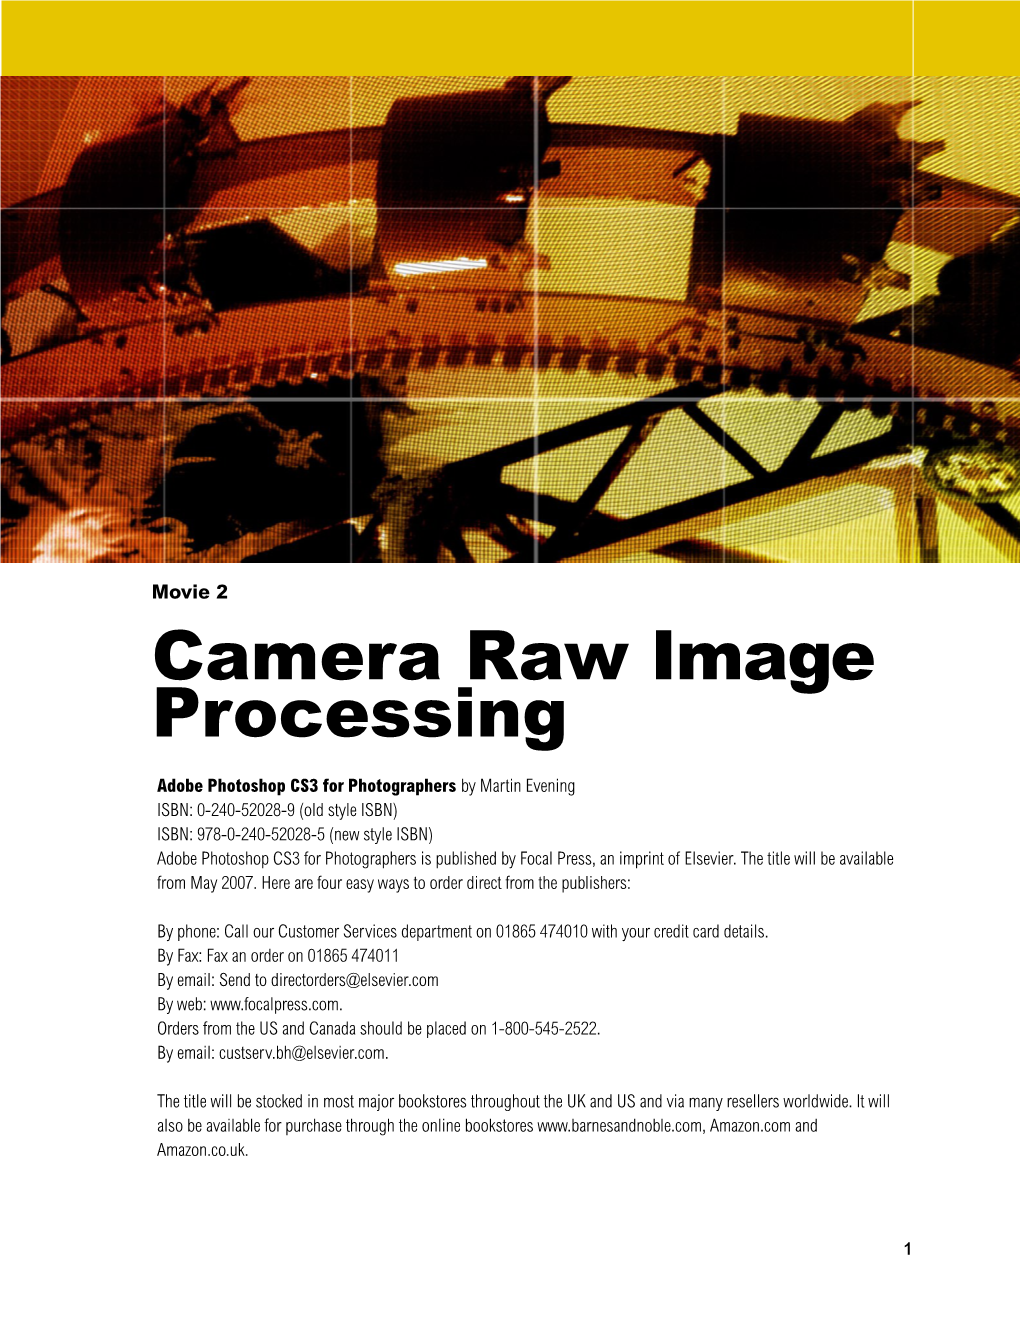 Camera Raw Image Processing